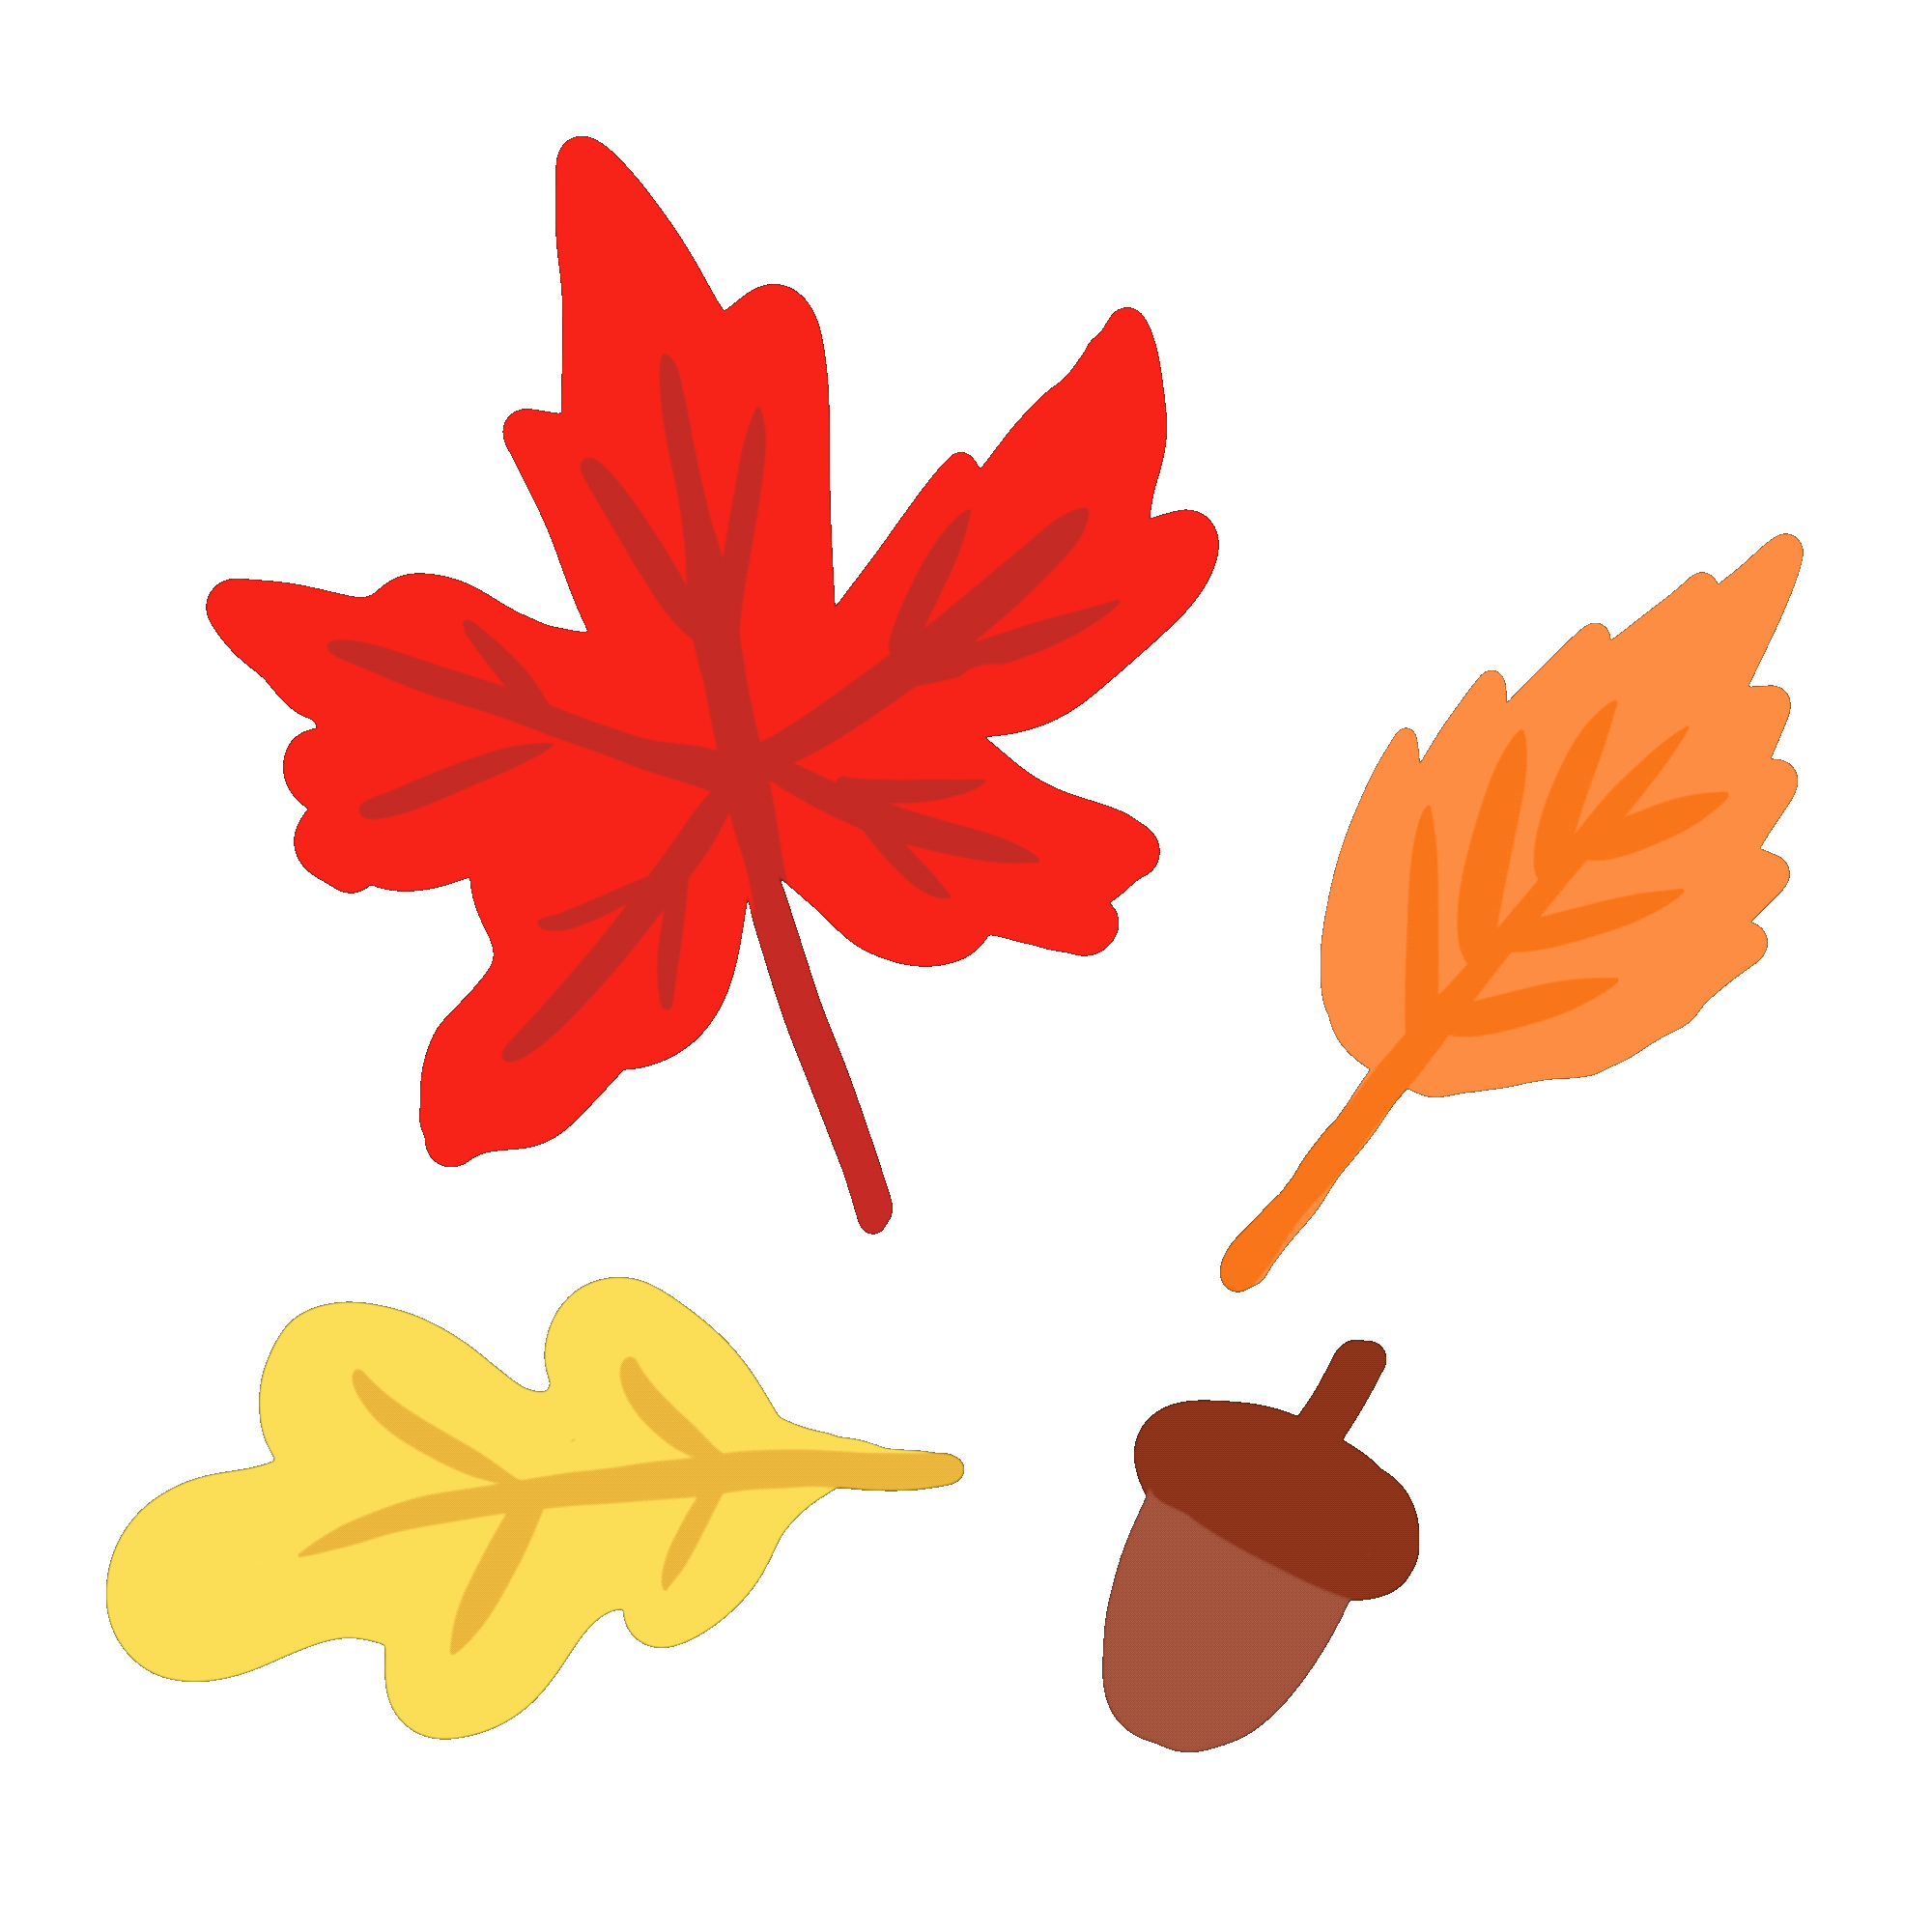 Nina Cosford Illustration - autumn leaves